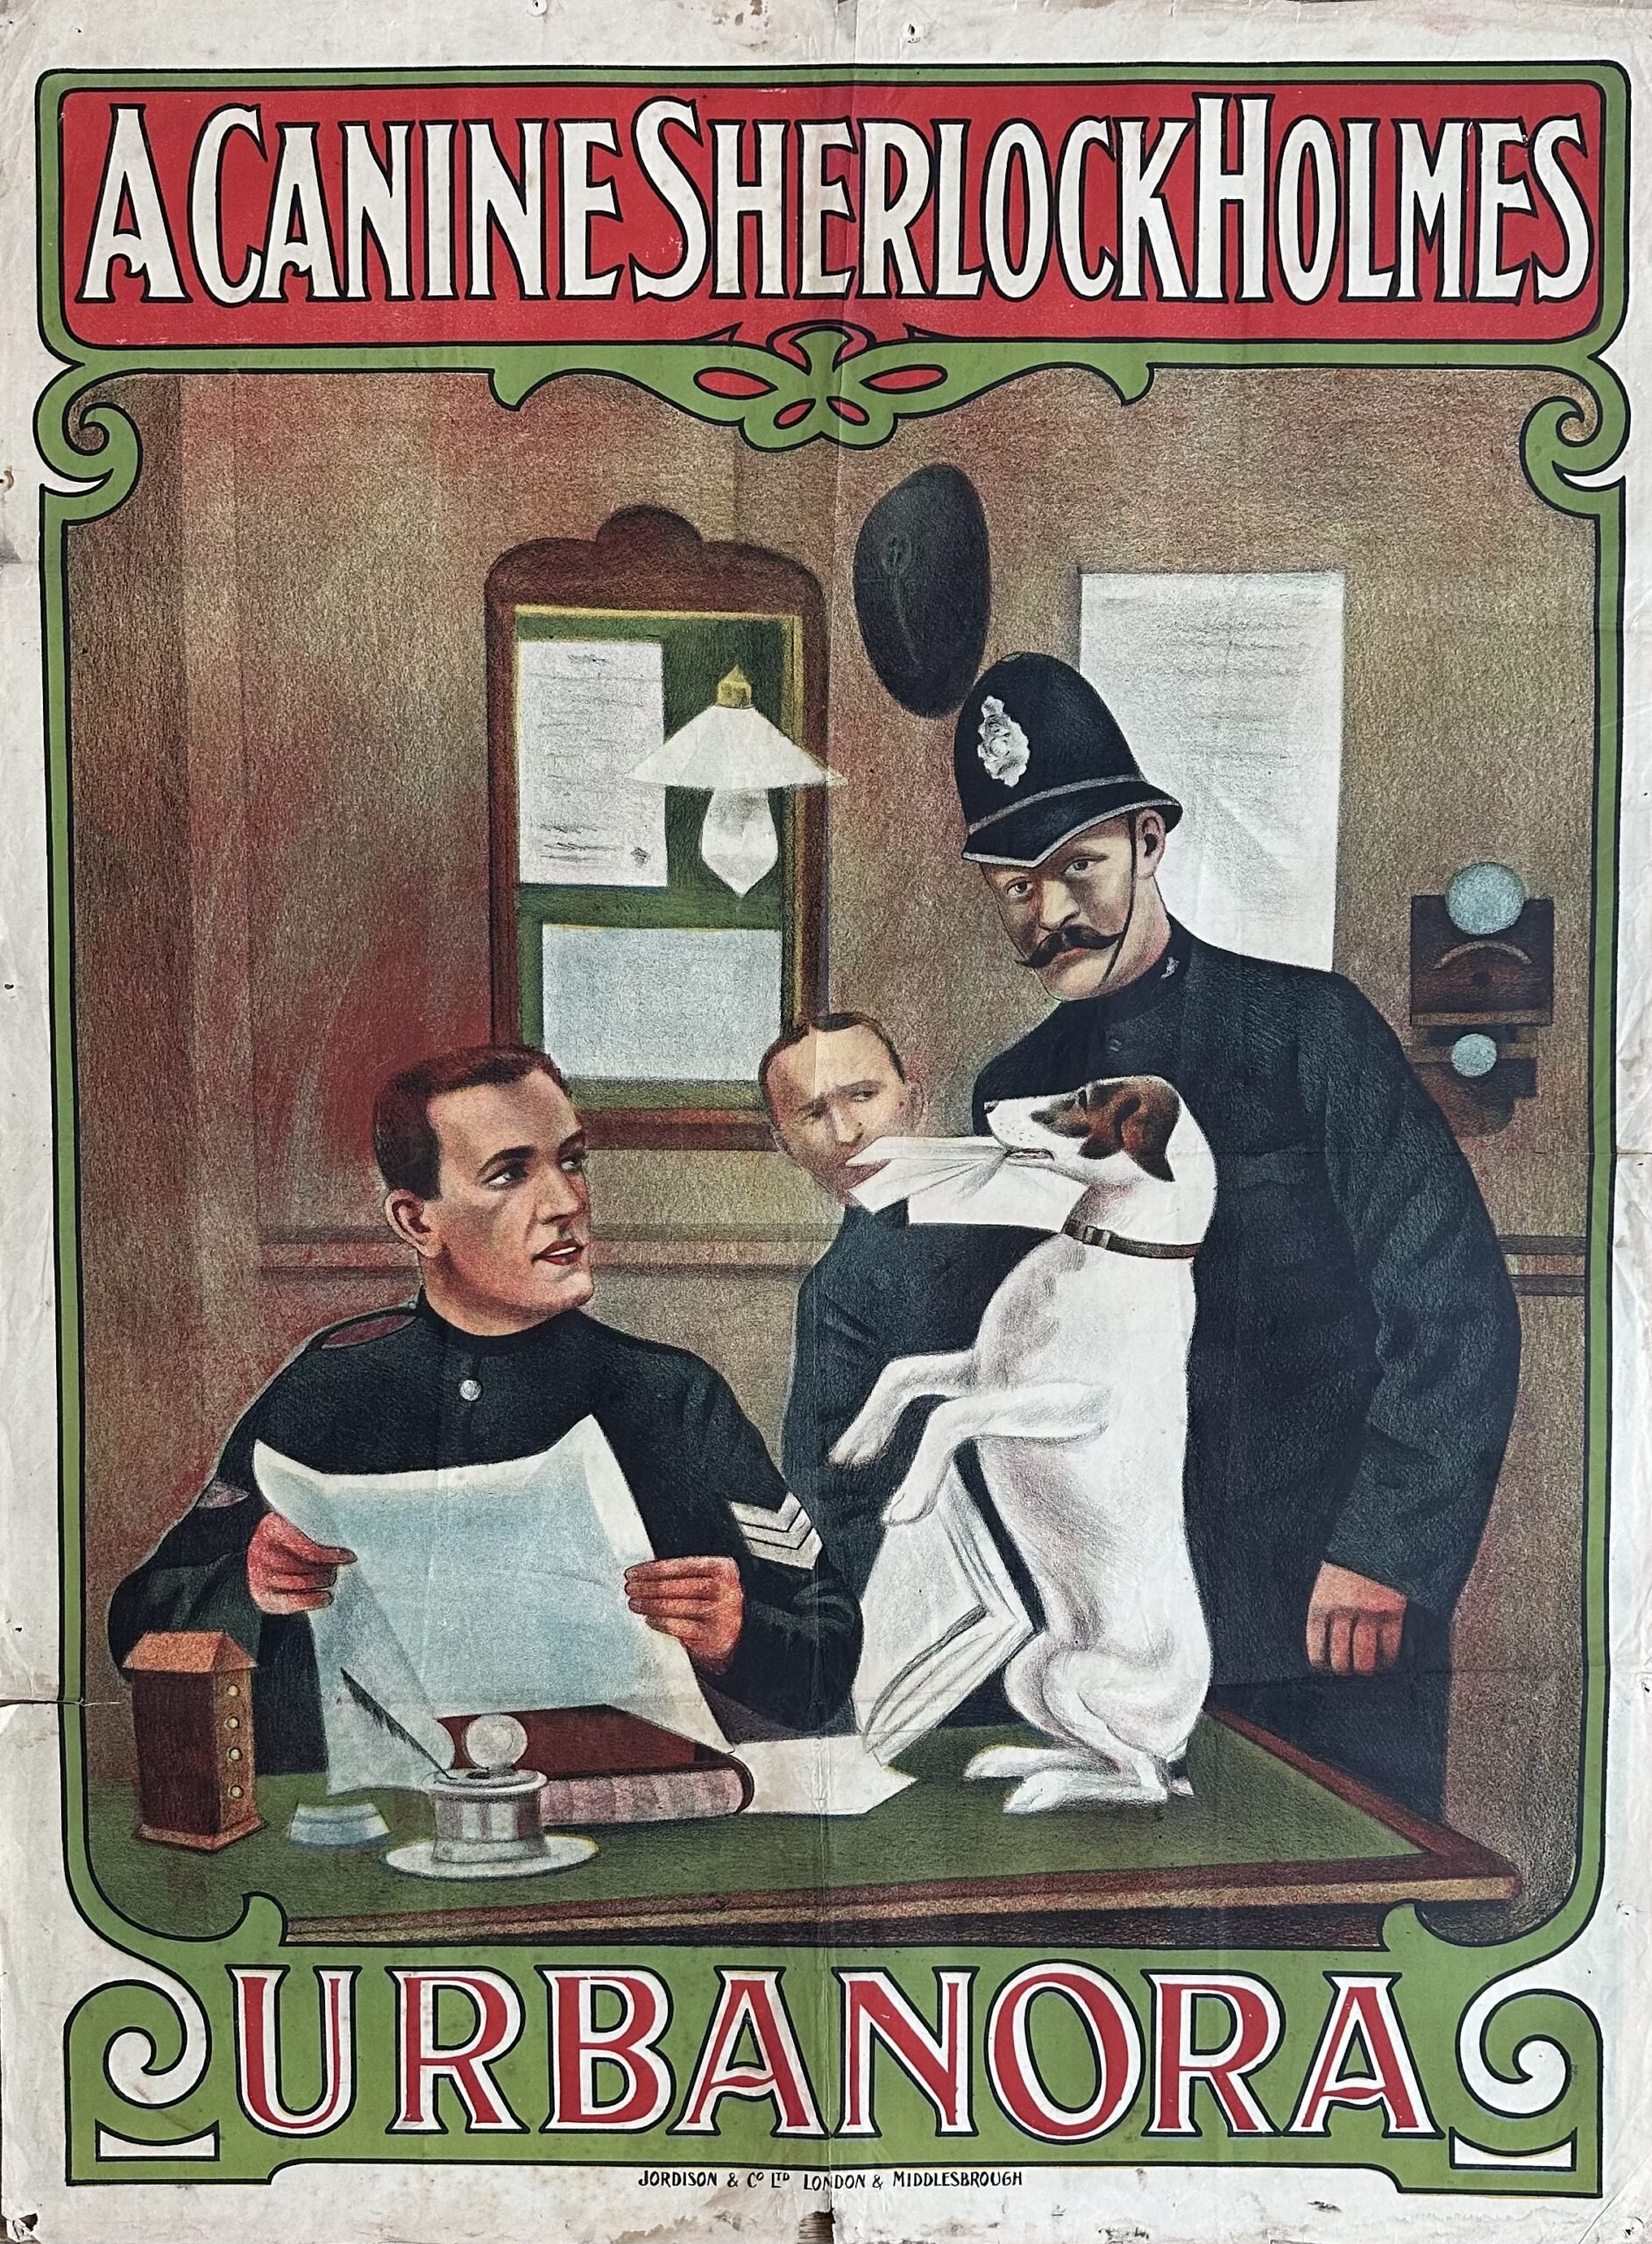 Original vintage British cinema movie poster for A Canine Sherlock Holmes, starring Spot the Urbanora Dog